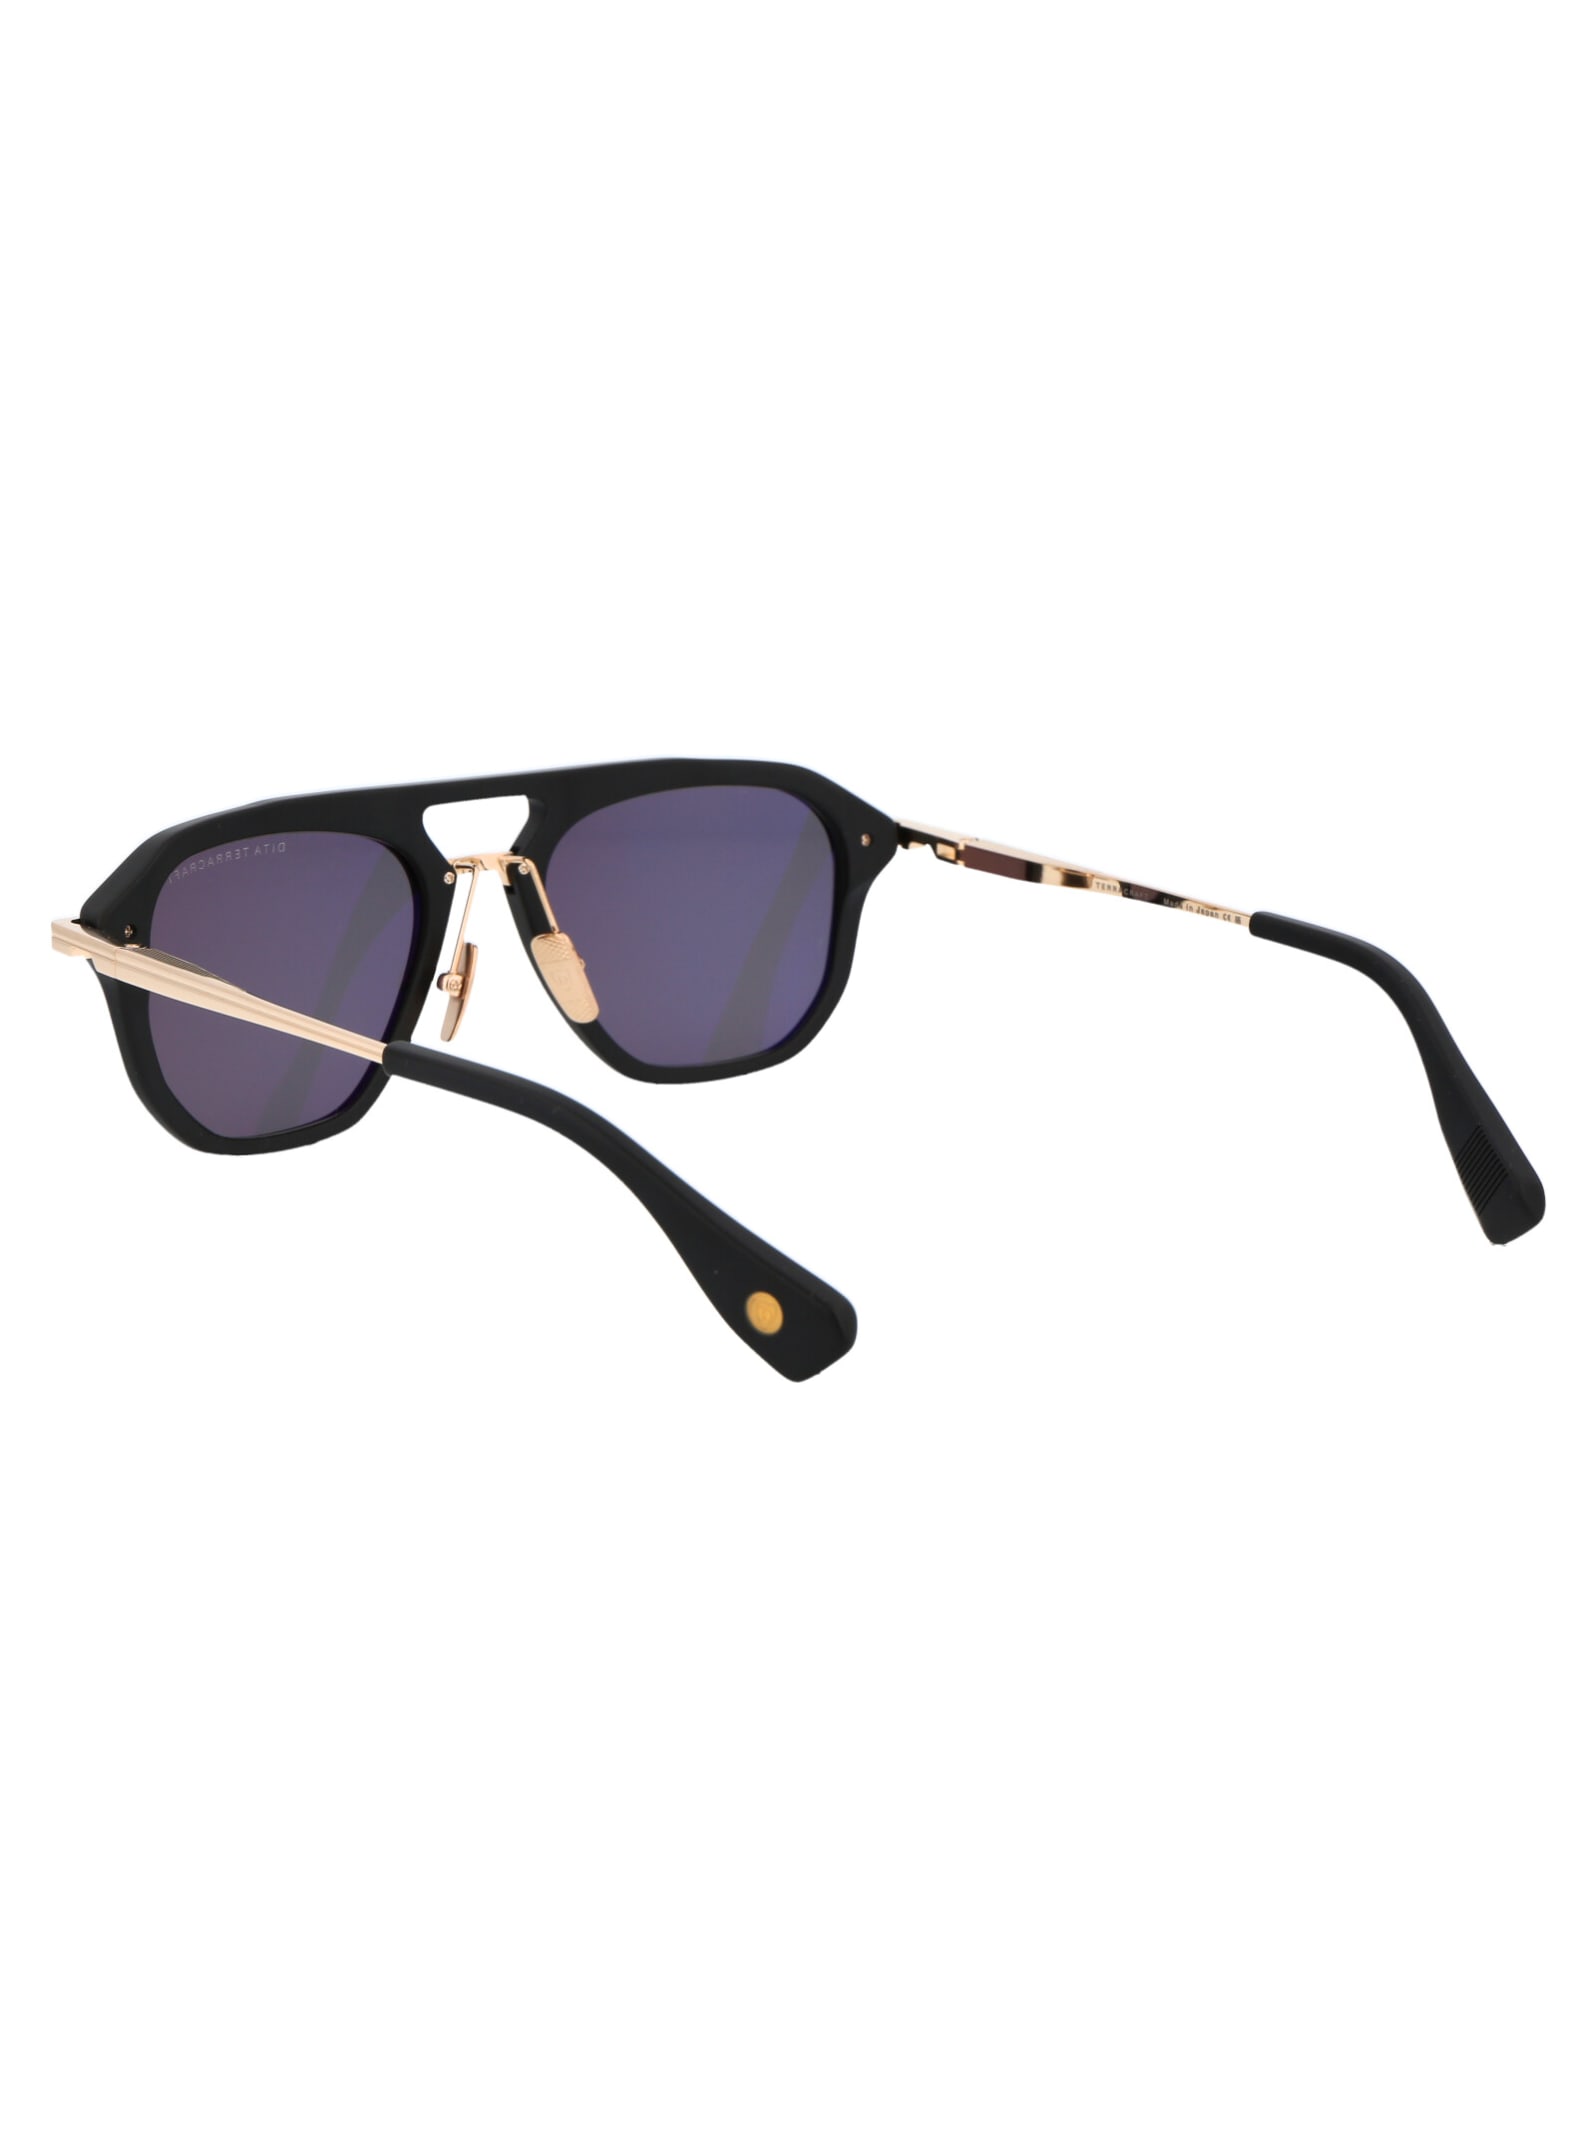 Shop Dita Terracraft Sunglasses In Matte Black - White Gold